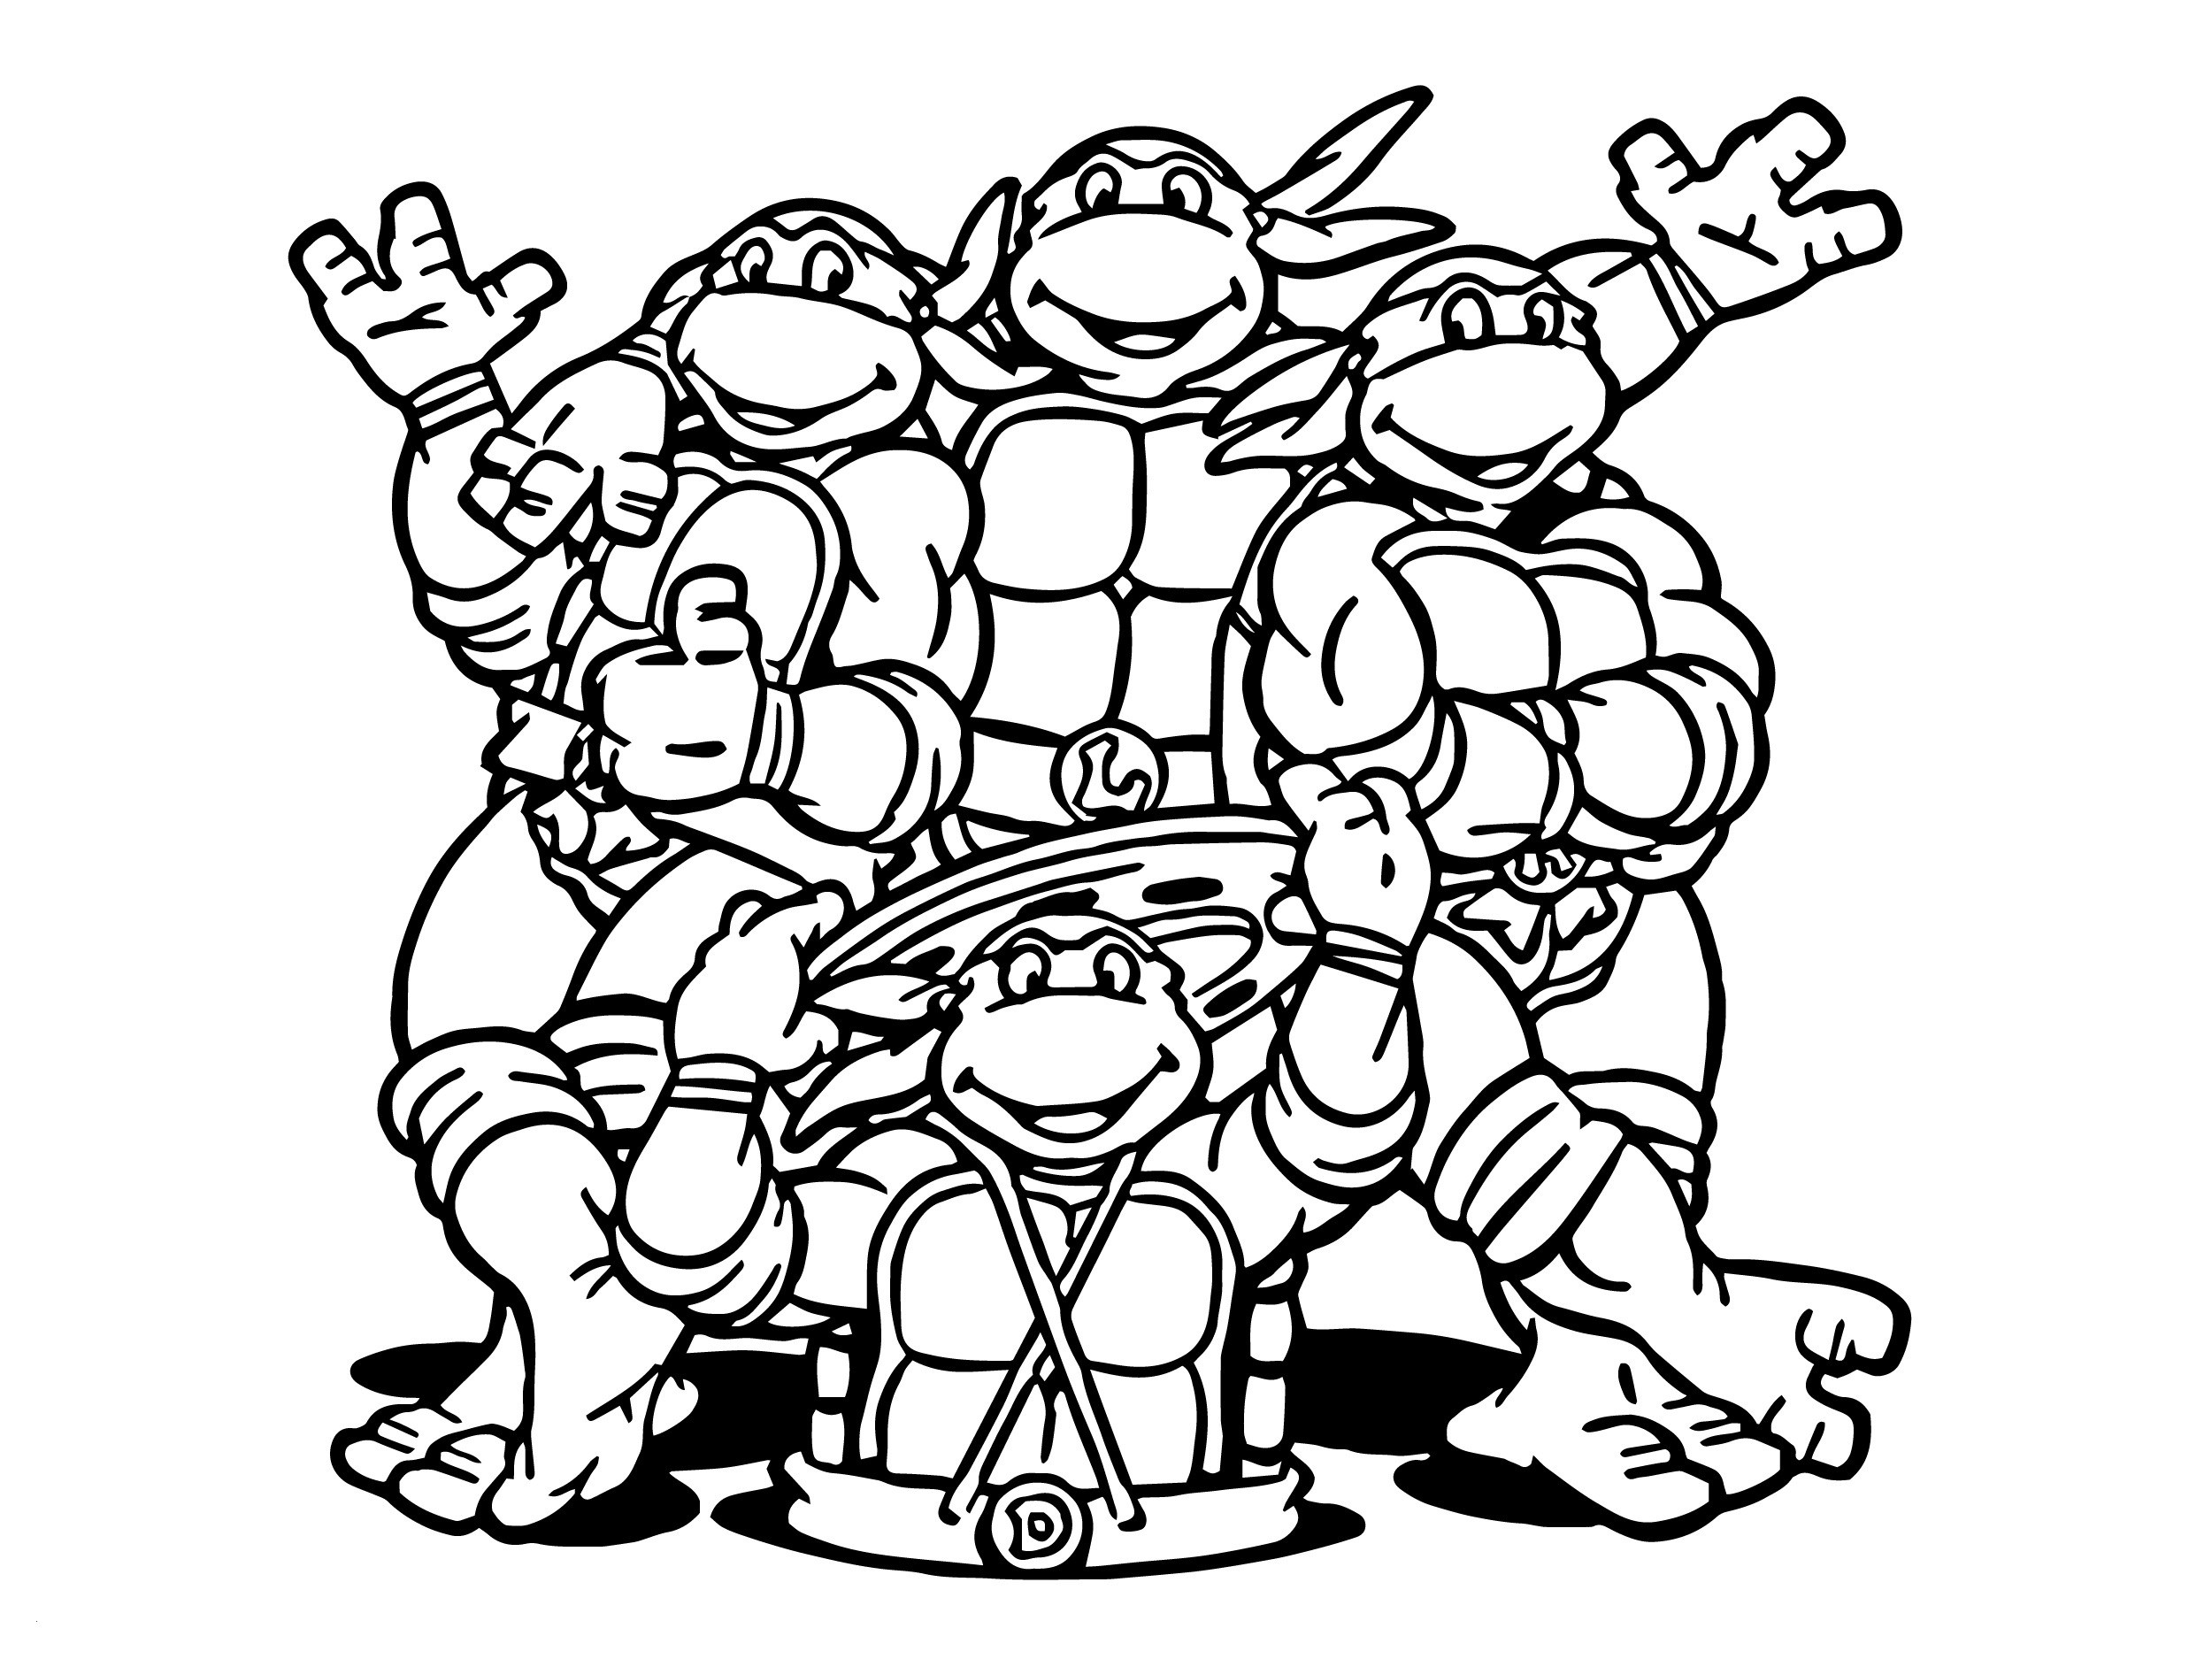 Ninja Coloring Pages For Kids
 Teenage Mutant Ninja Turtles Coloring Pages Best